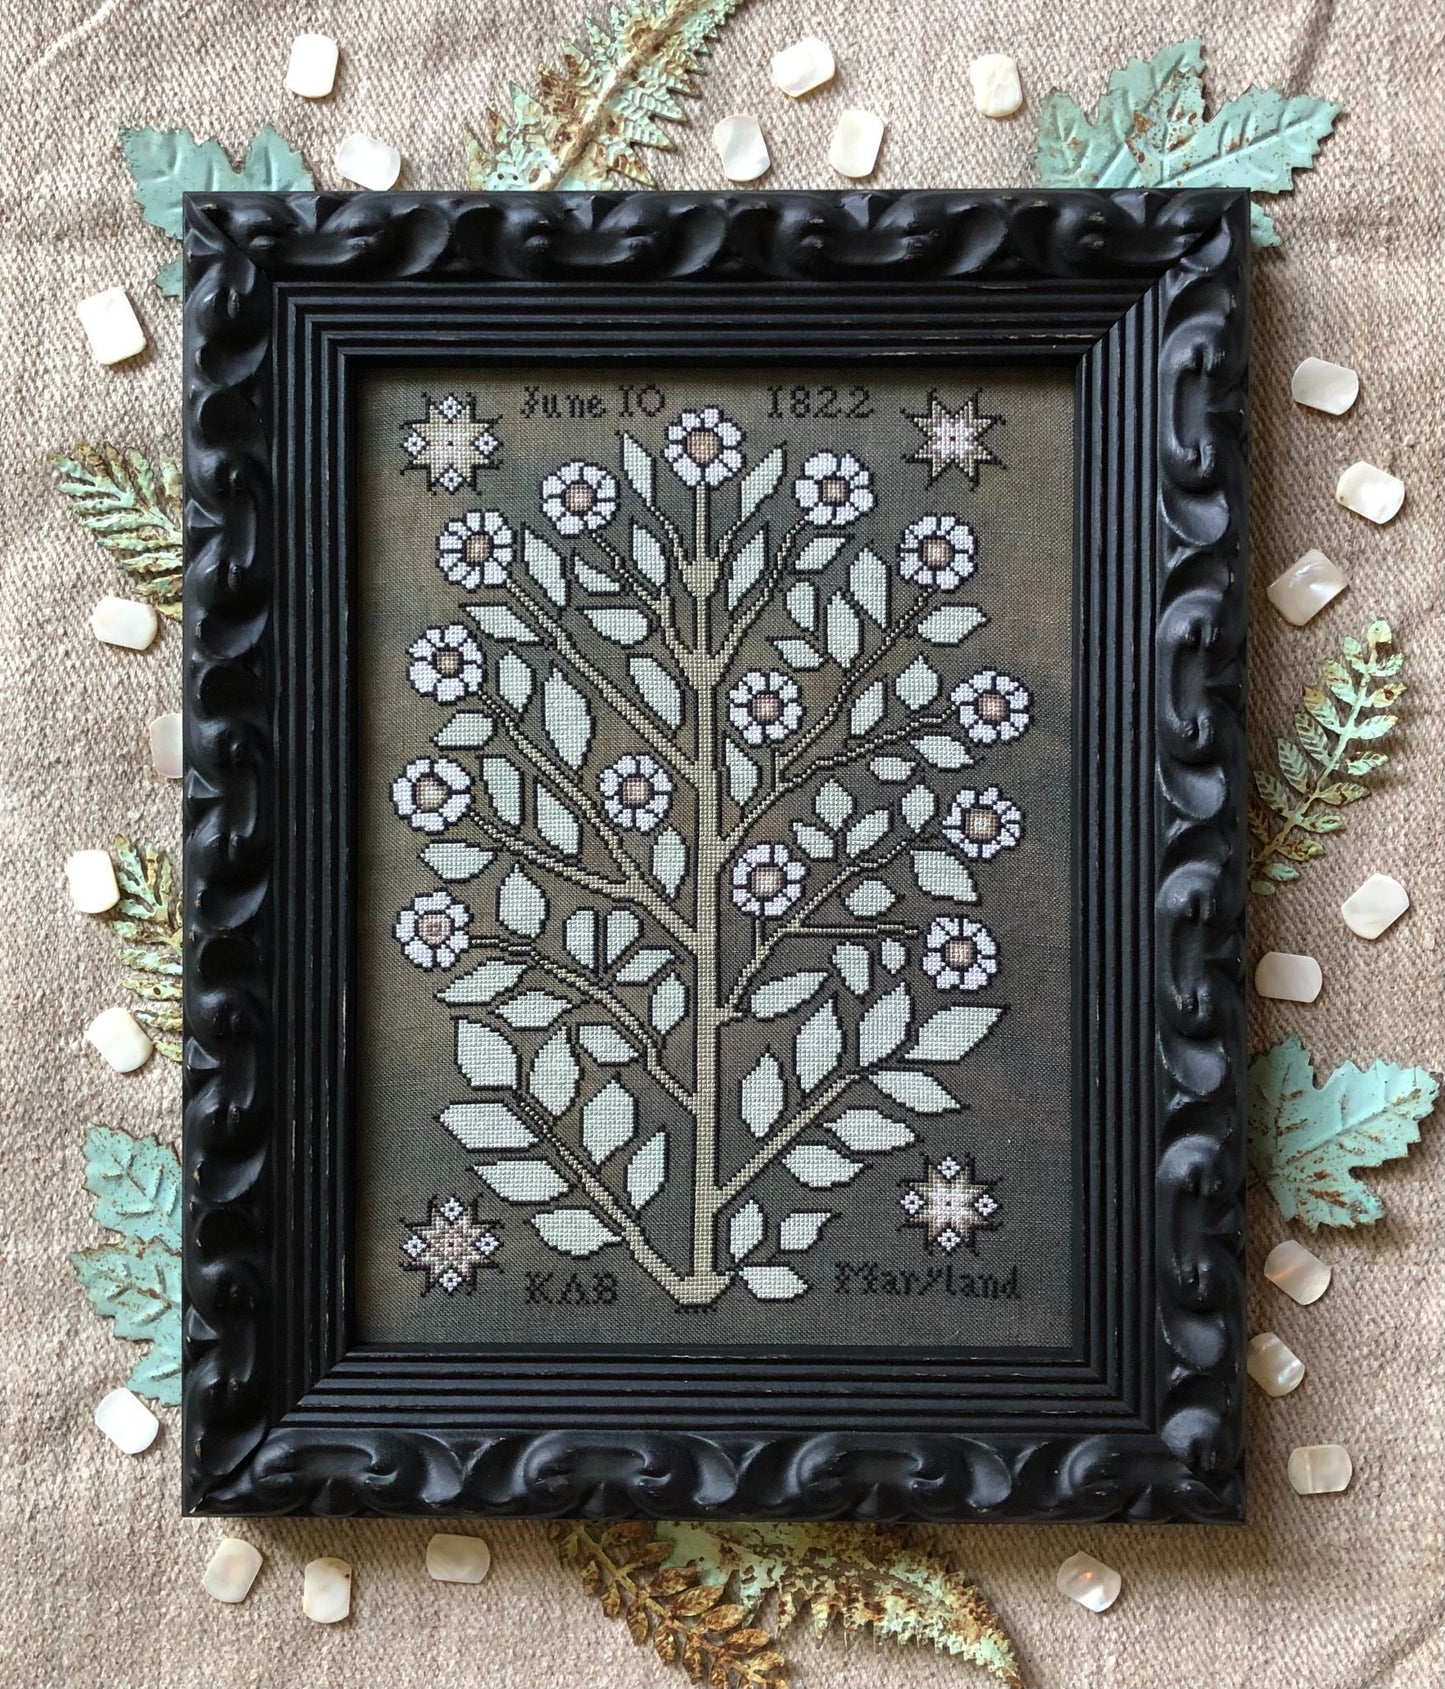 Wildflowers - Cross Stitch Pattern by Kathy Barrick